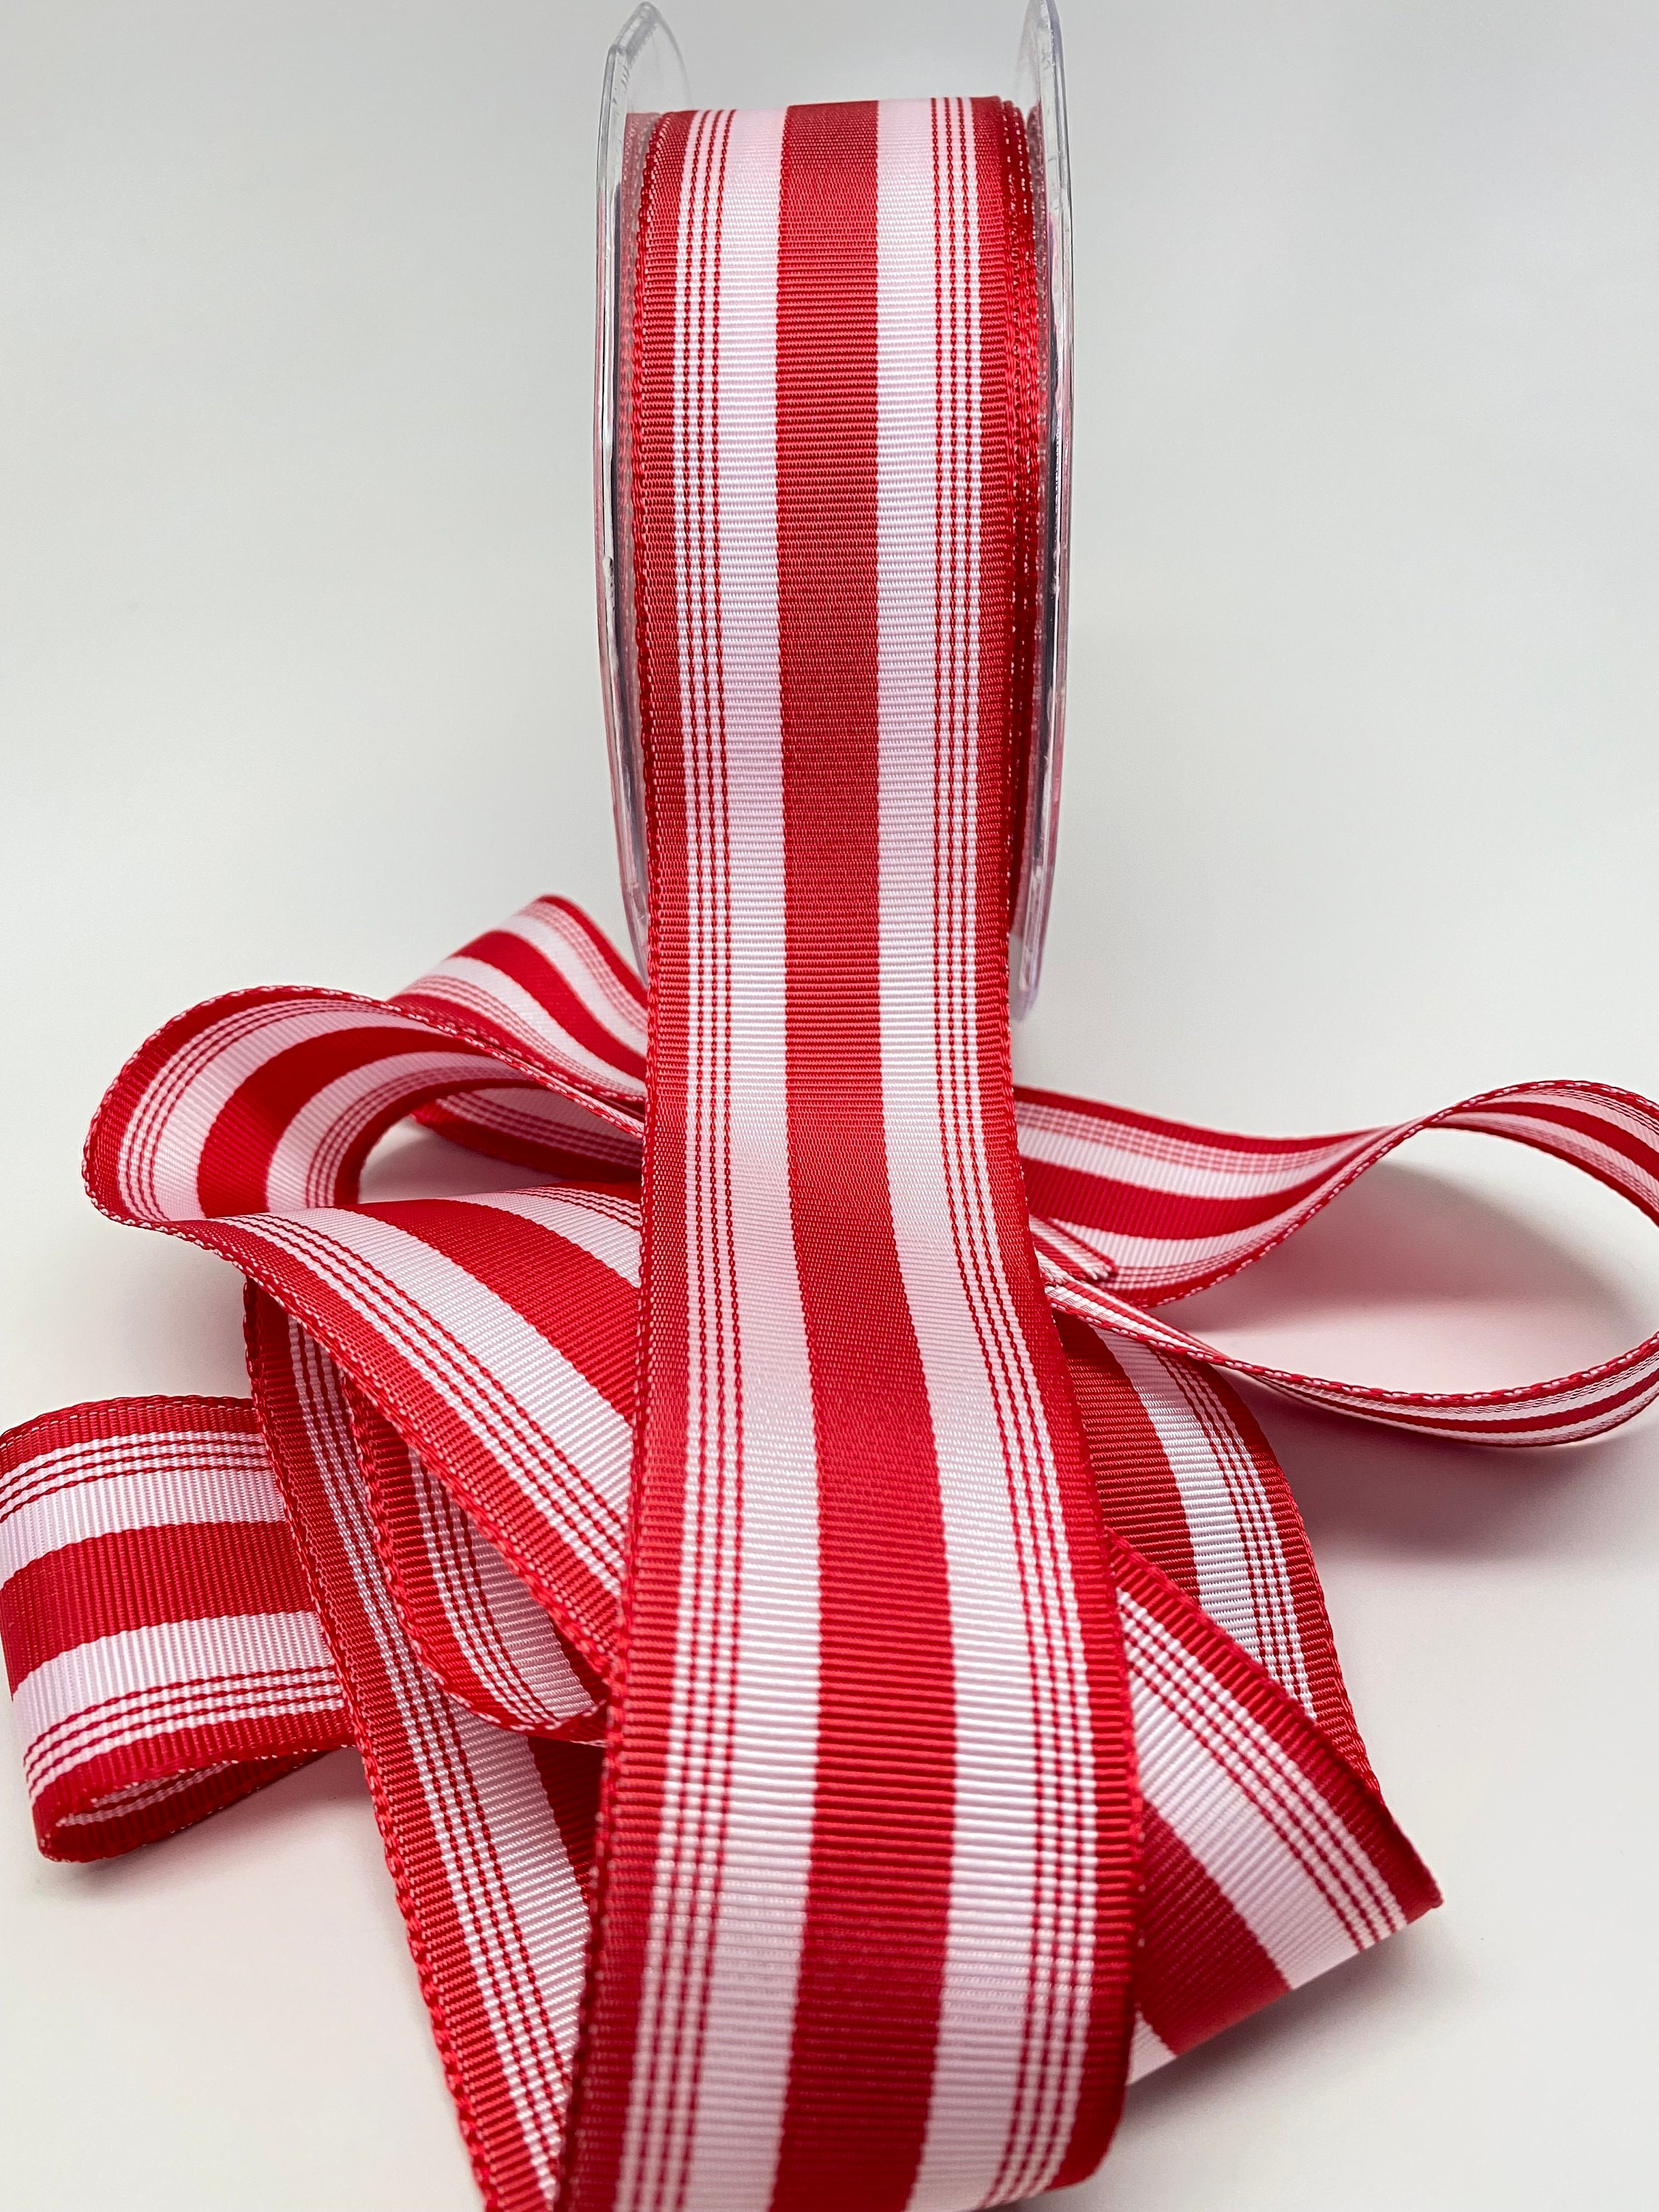 Chevron Striped Twill - Red and White - Ribbon - 3/4 inch - 1 Yard